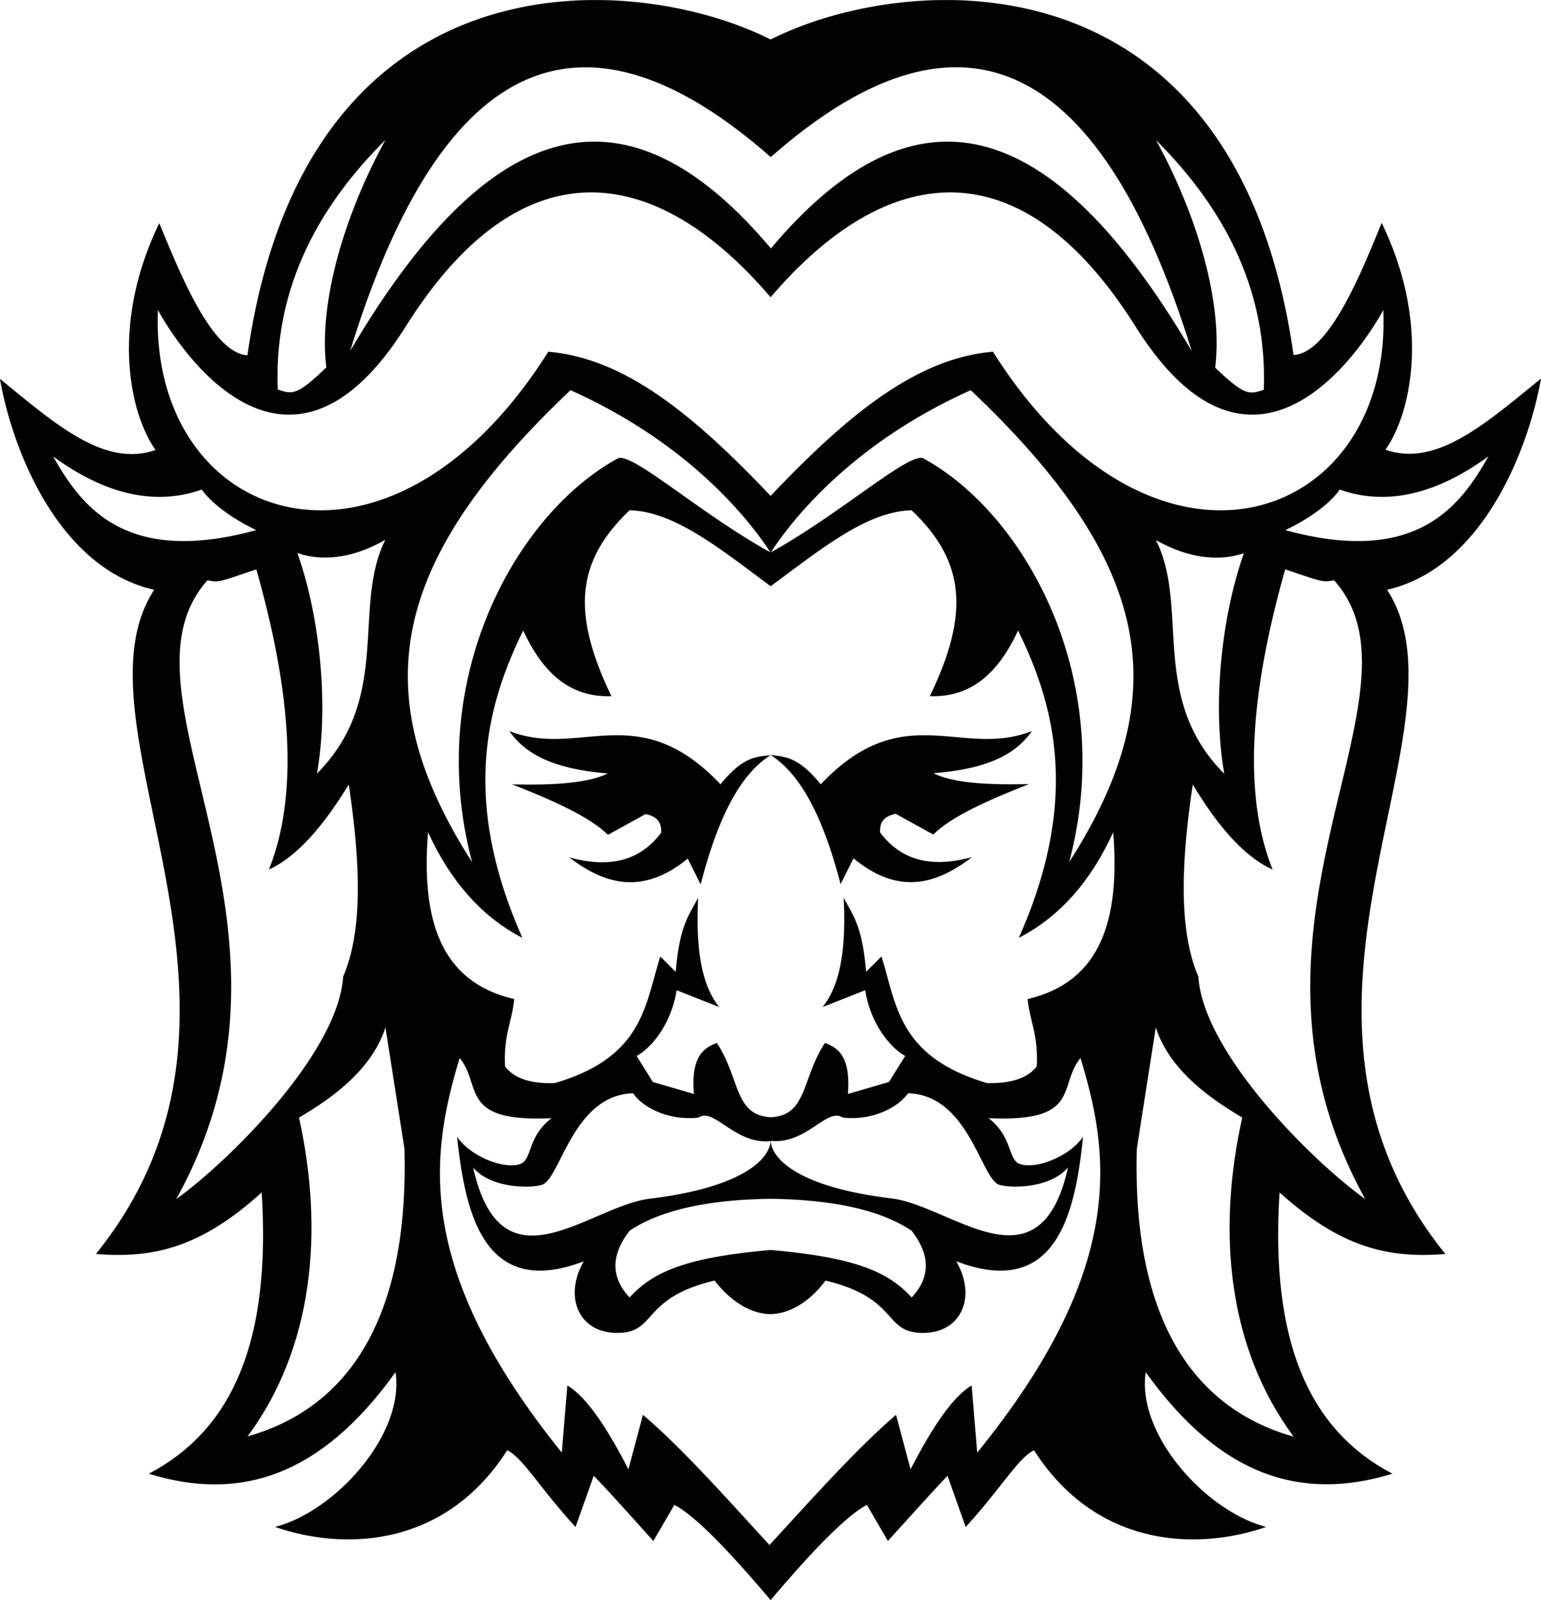 Baldr Balder or Baldur Norse God Front View Mascot Black and White by patrimonio